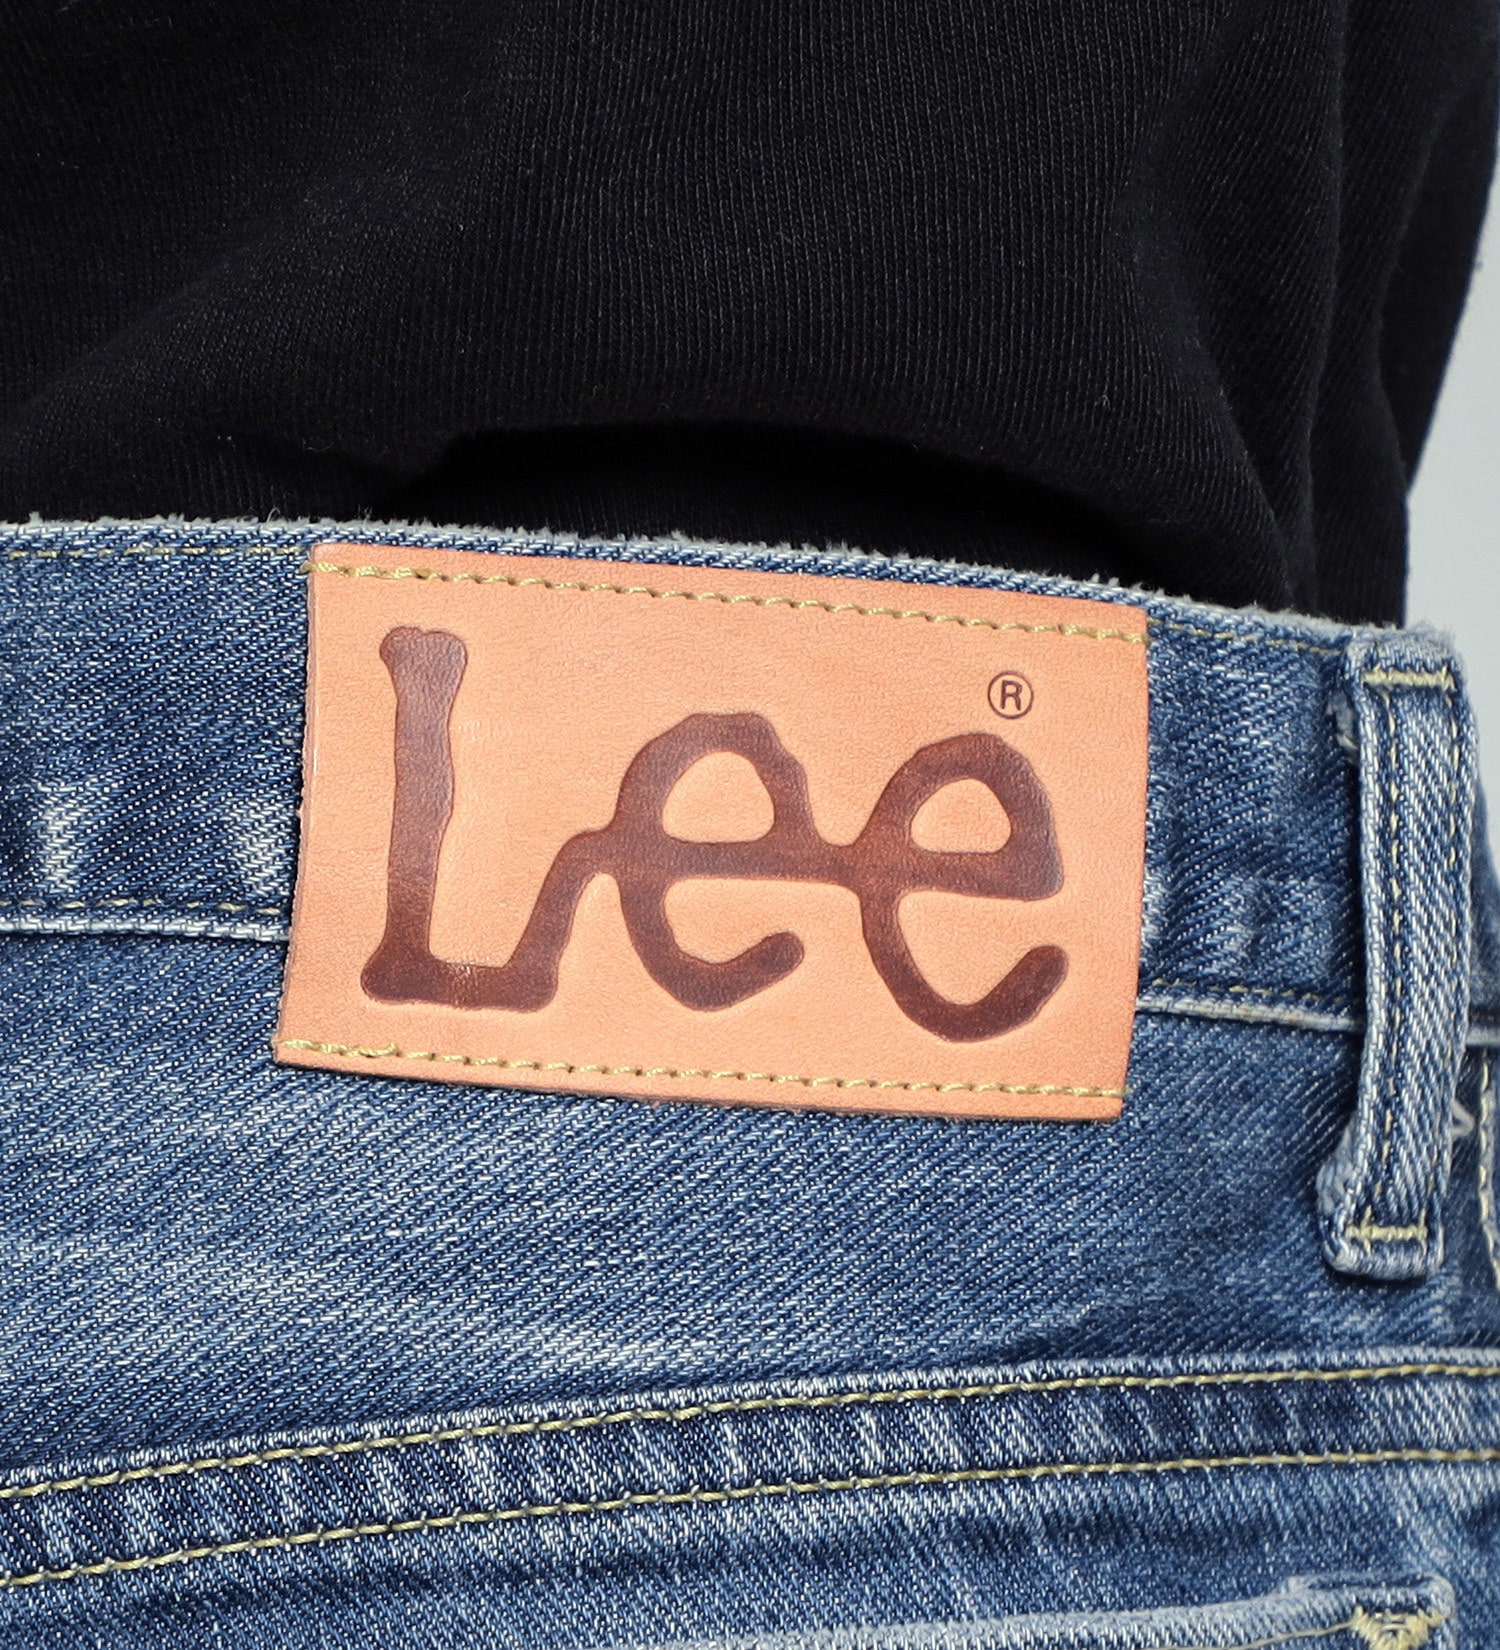 Lee(リー)のCOMPILATIONS スリムテーパードデニム|パンツ/デニムパンツ/メンズ|中色ブルー